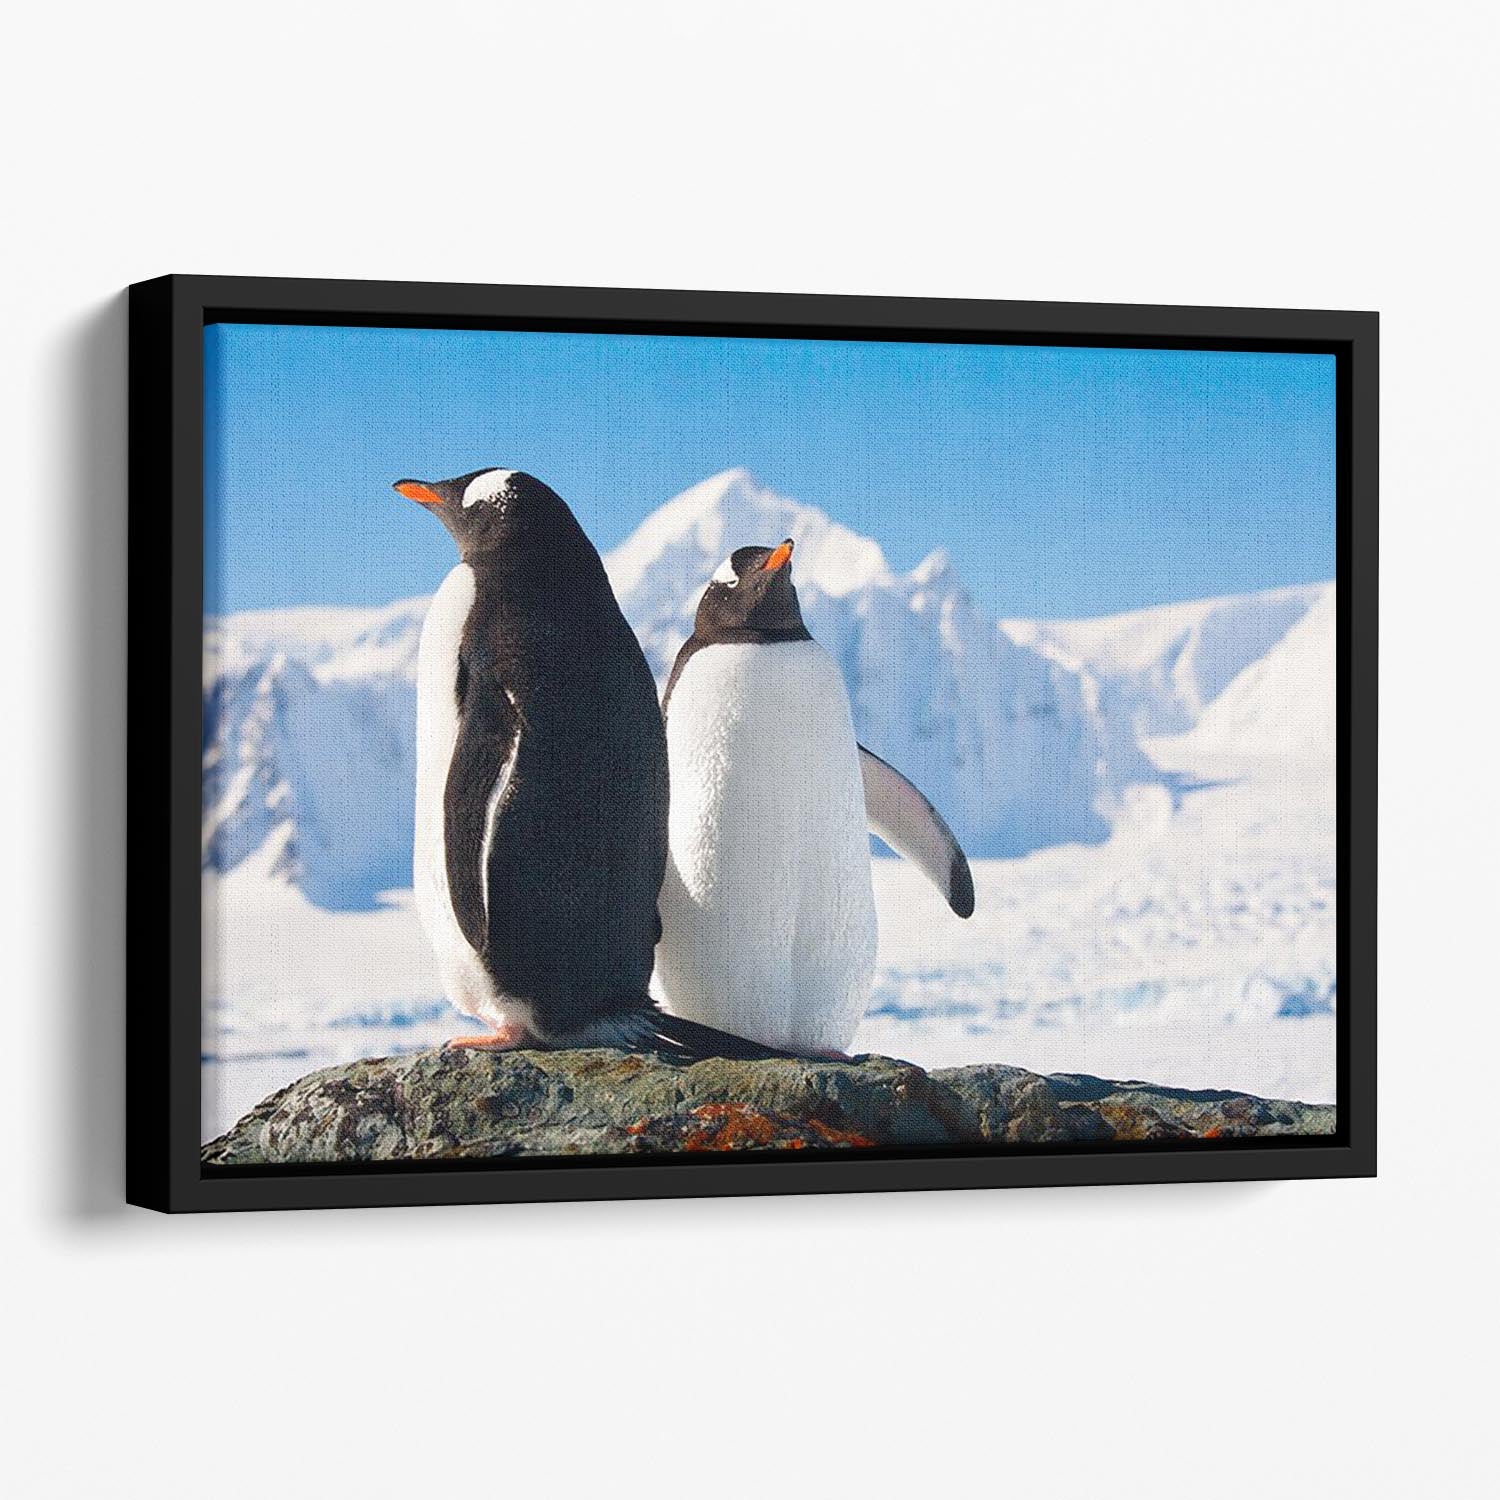 Two penguins dreaming together sitting on a rock Floating Framed Canvas - Canvas Art Rocks - 1